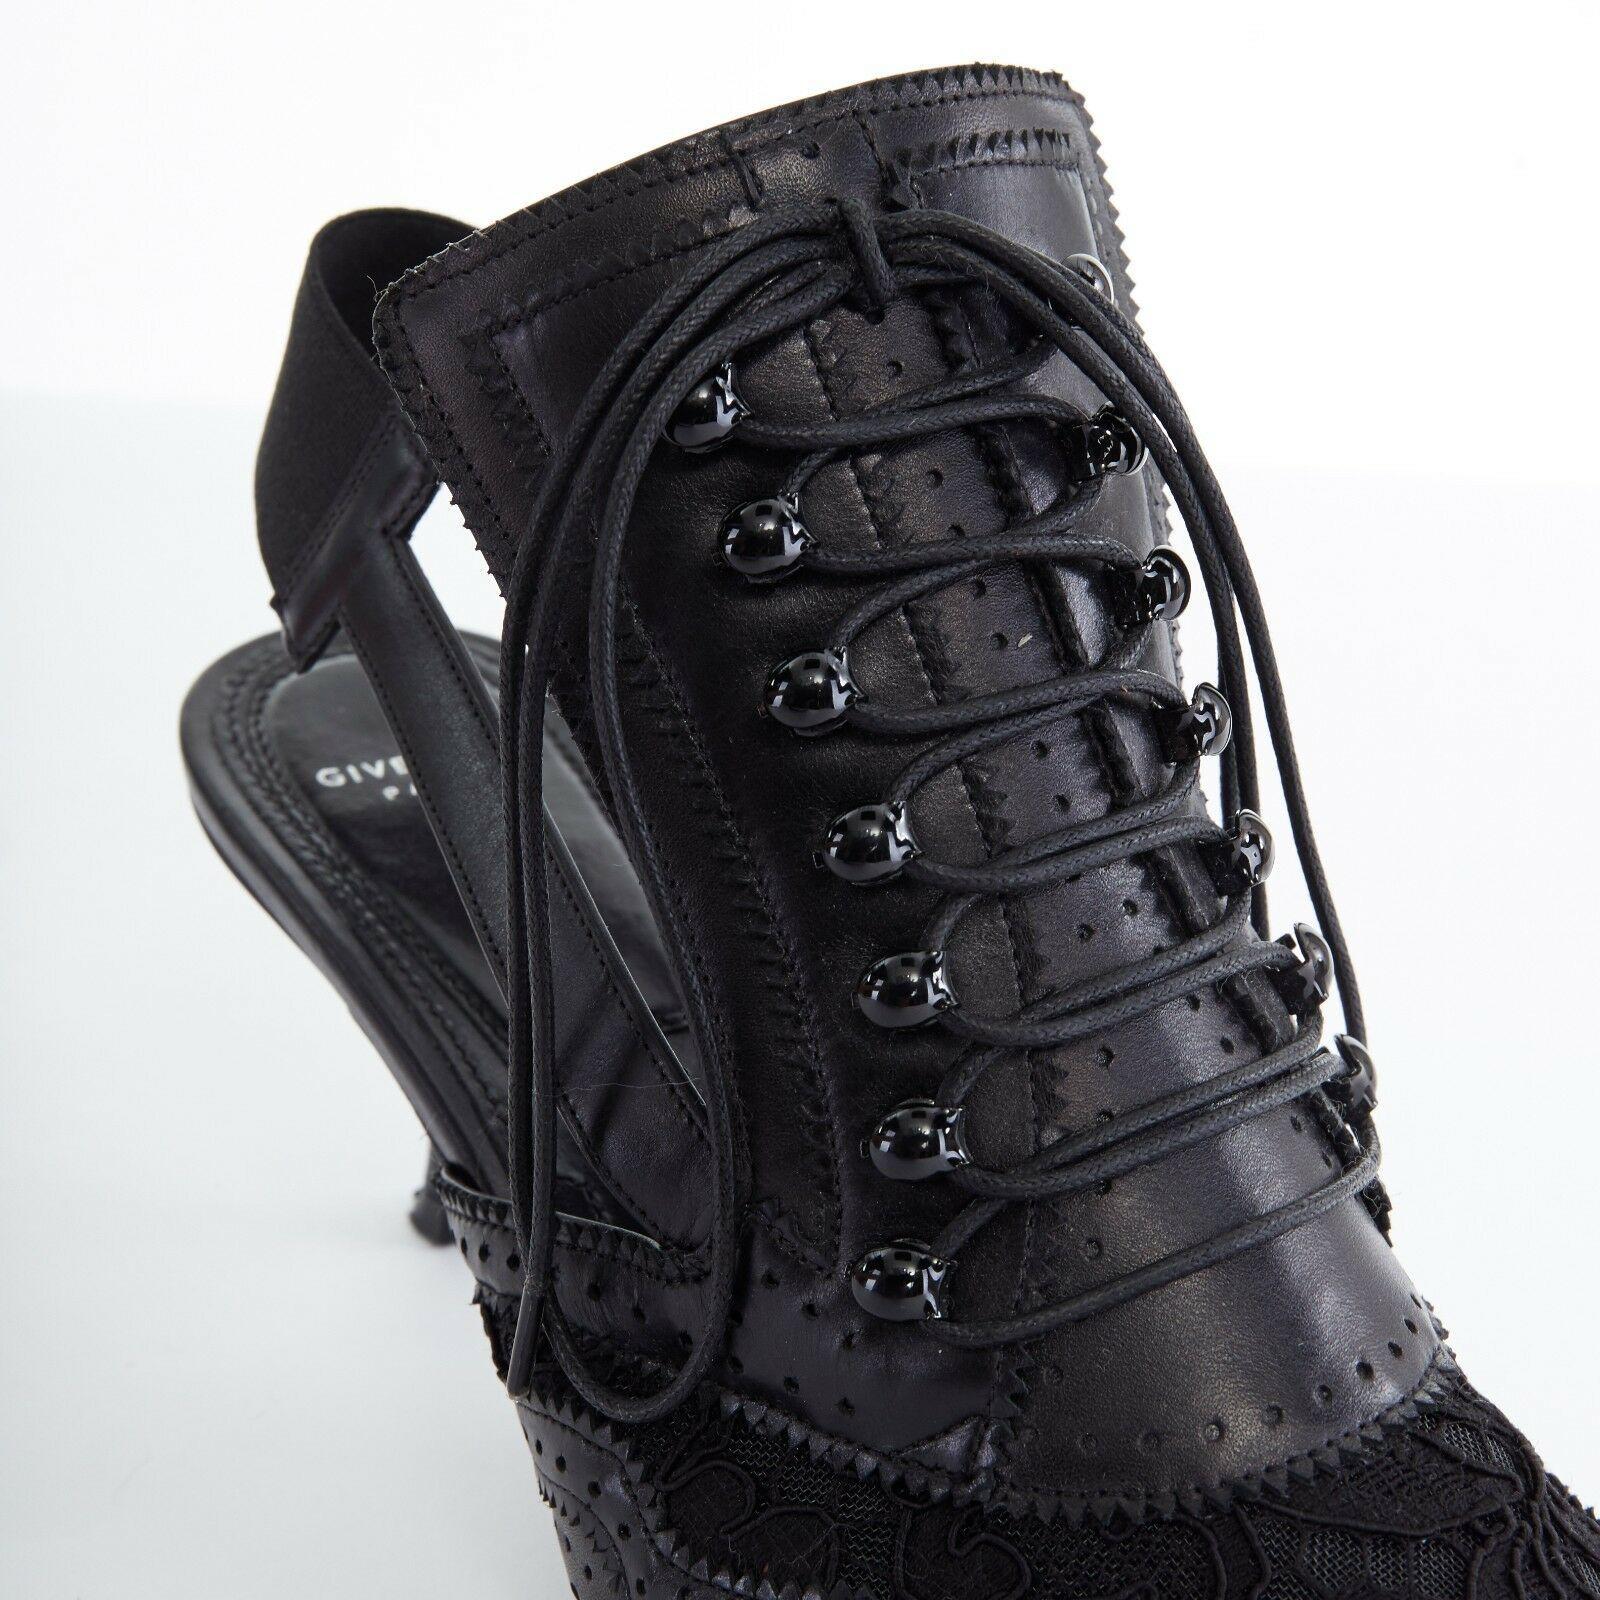 Women's runway GIVENCHY TISCI black lace brogue pointy sling back kitten heel shoes EU38